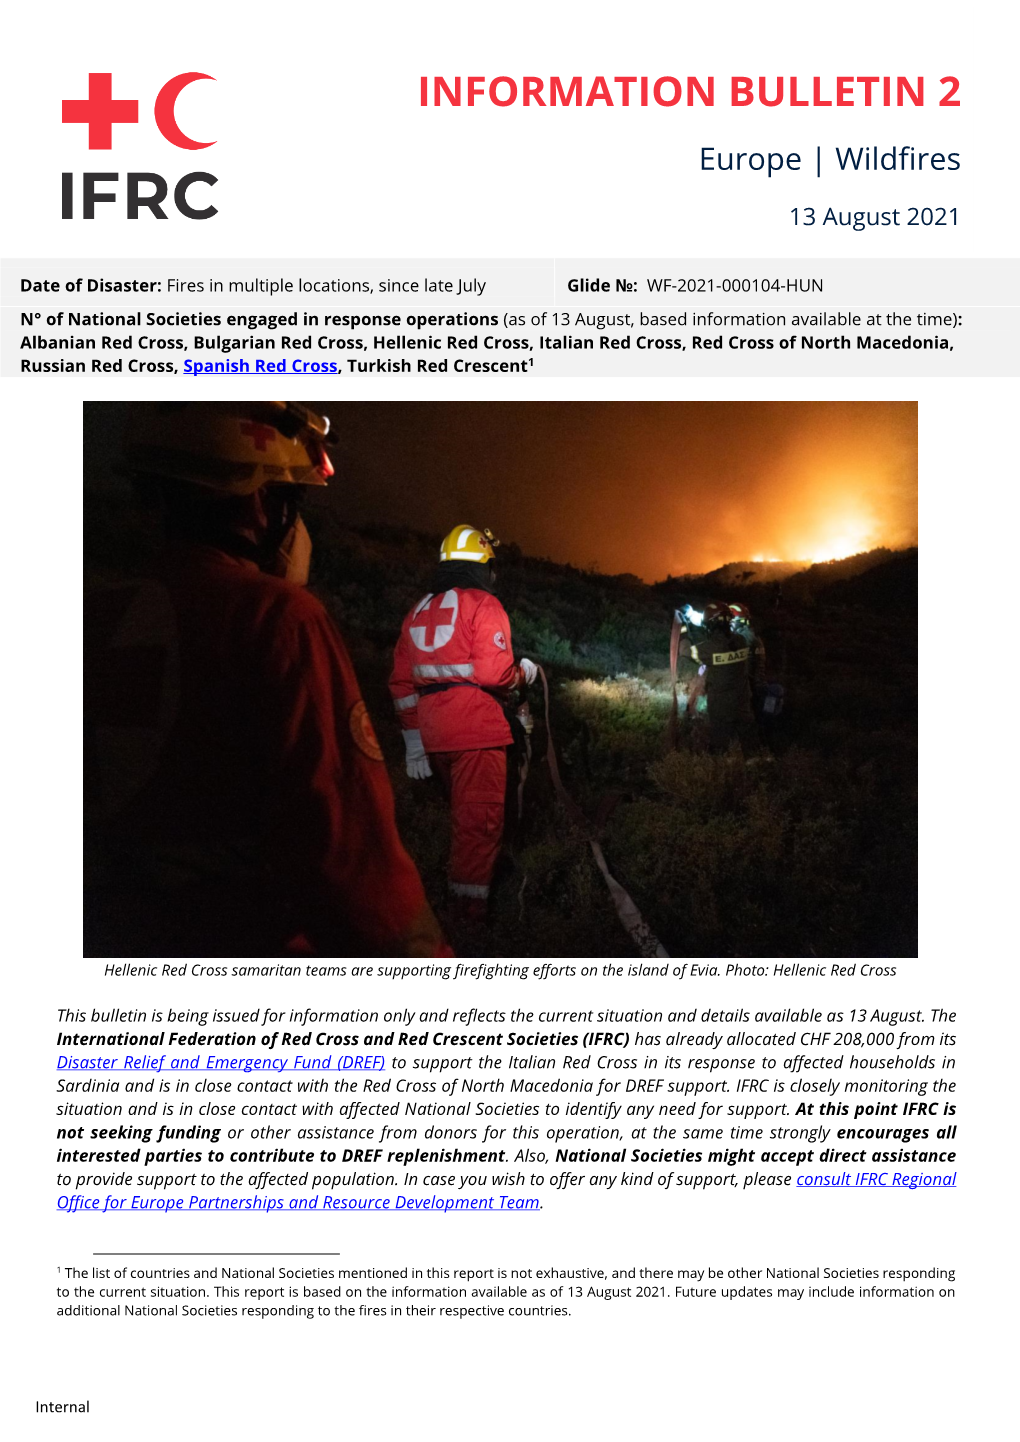 INFORMATION BULLETIN 2 Europe | Wildfires